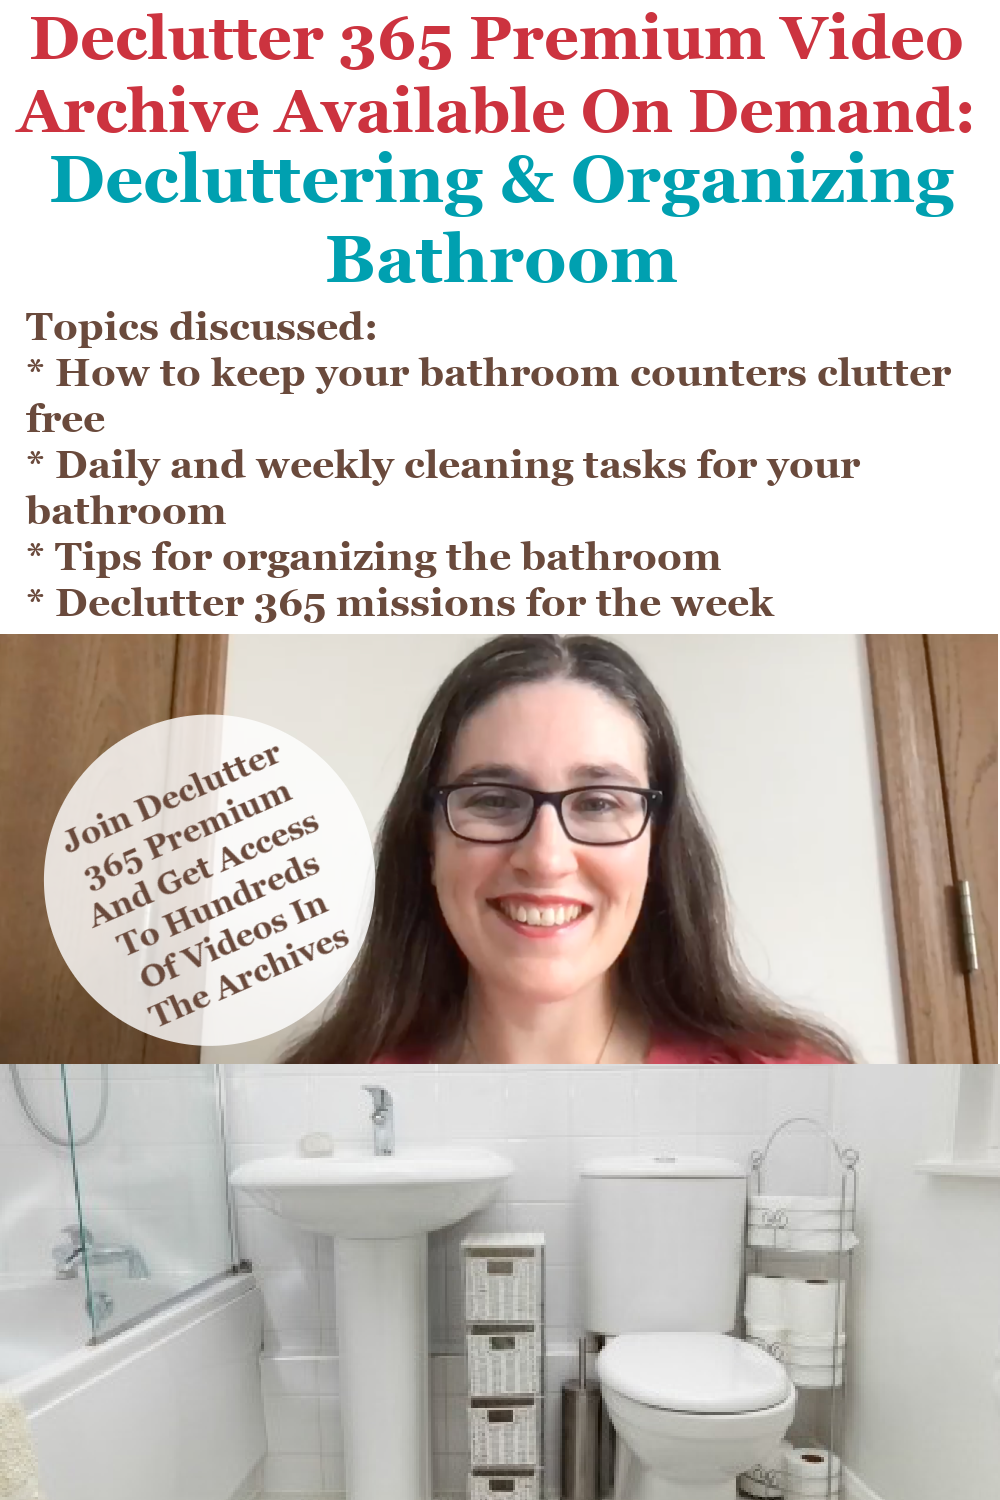 How to Organize the Bathroom